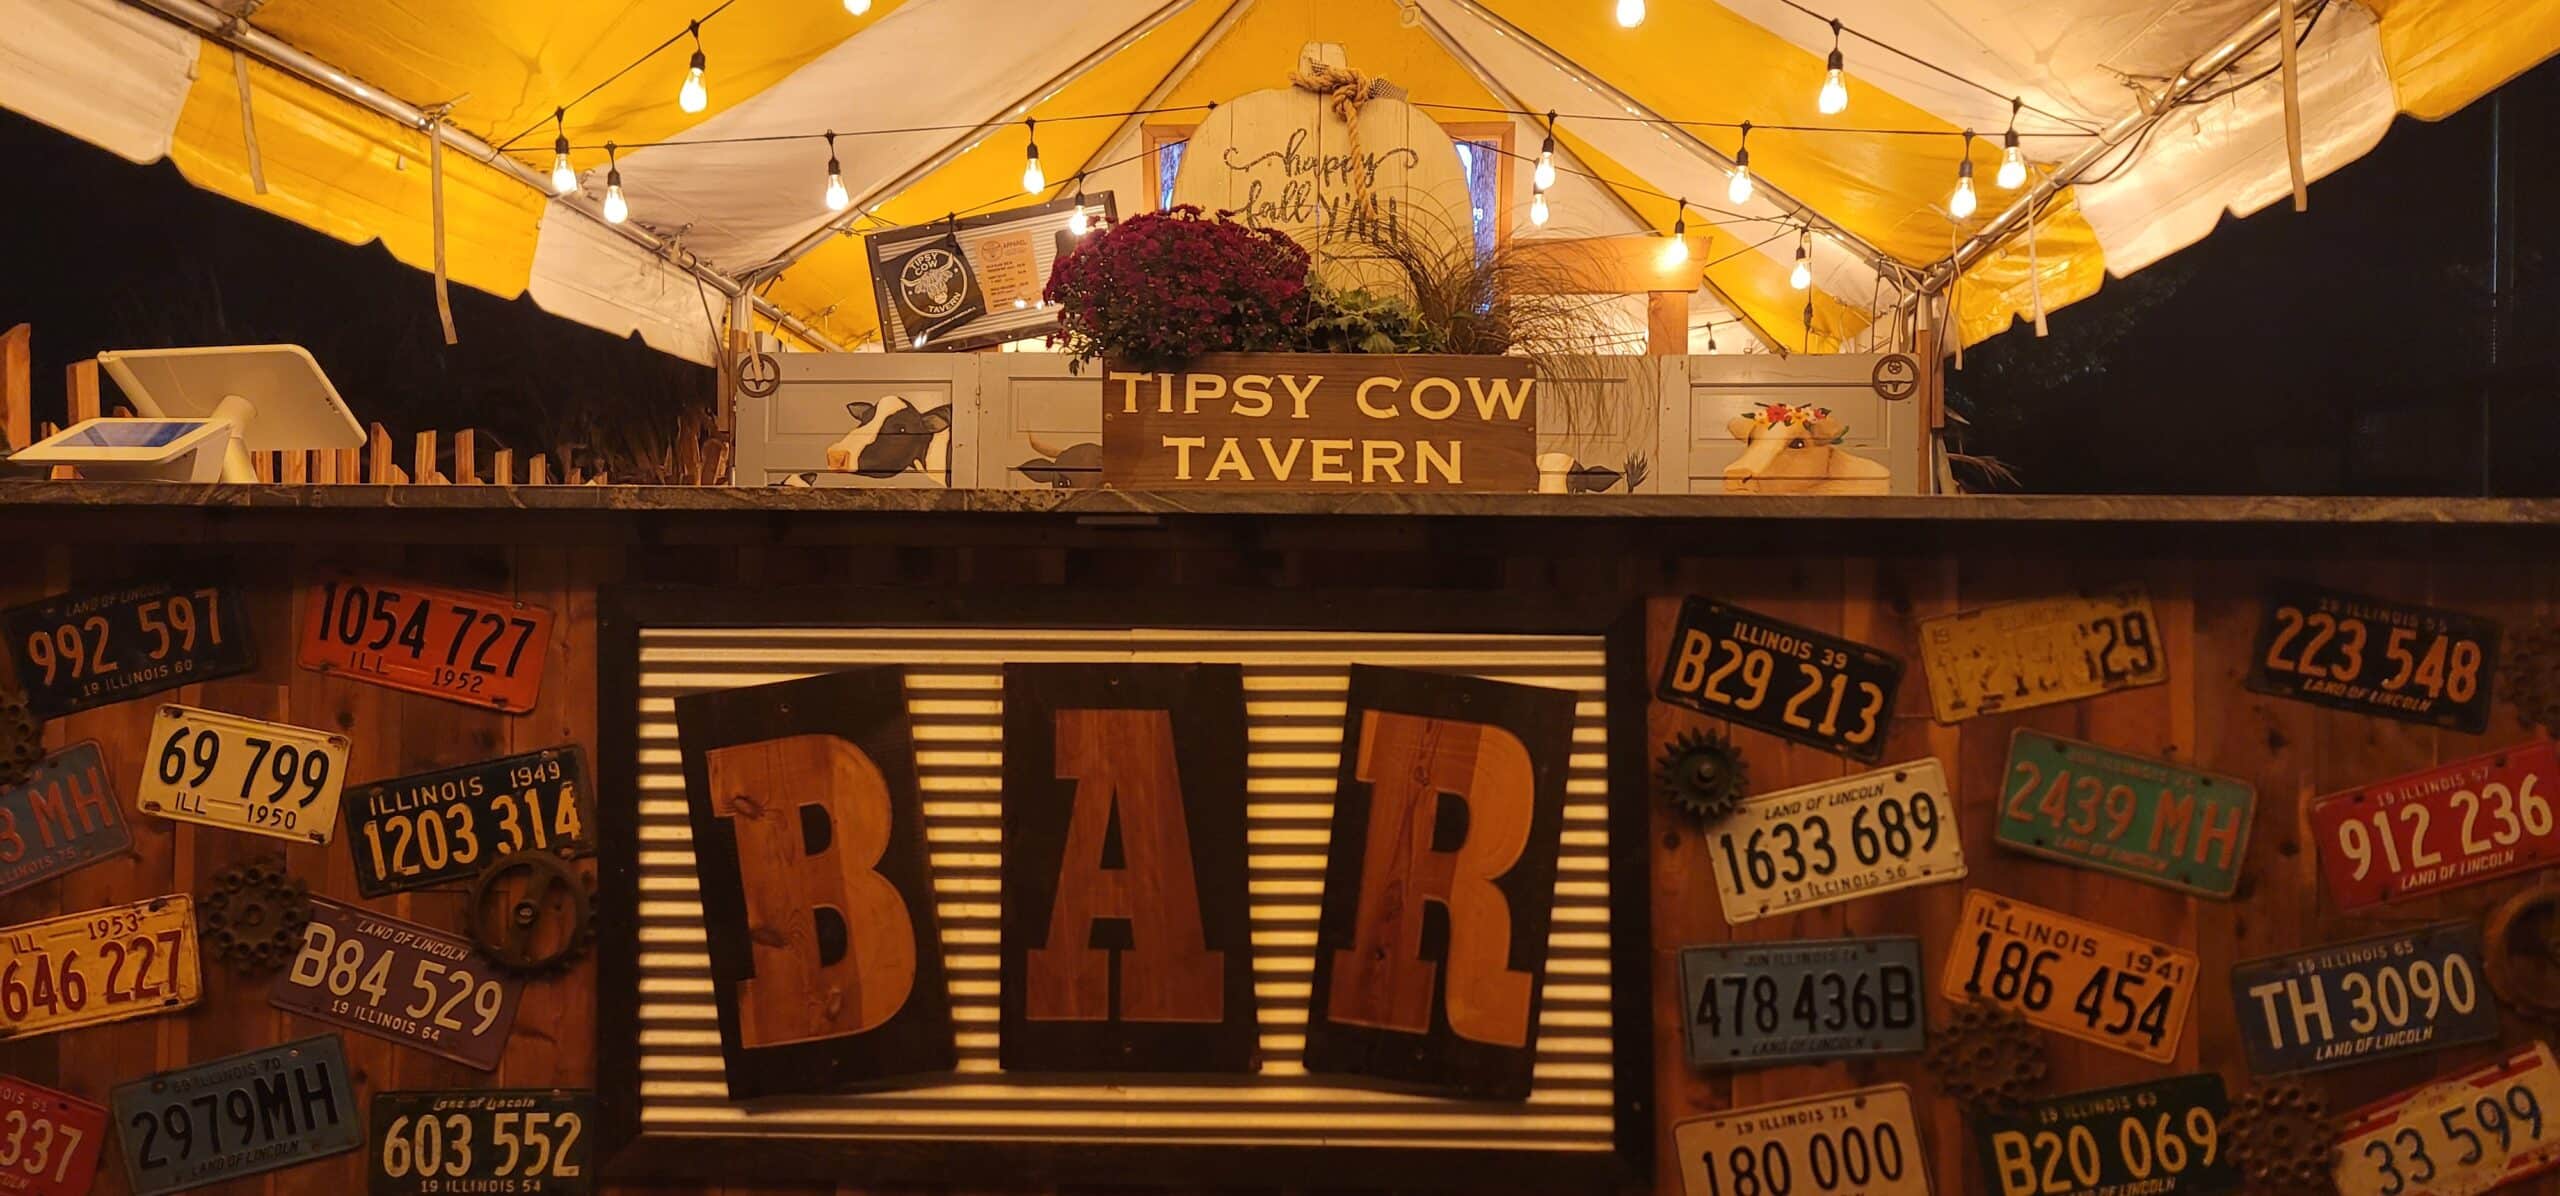 Tipsy Cow Tavern Bar Bengtson Pumpkin Patch